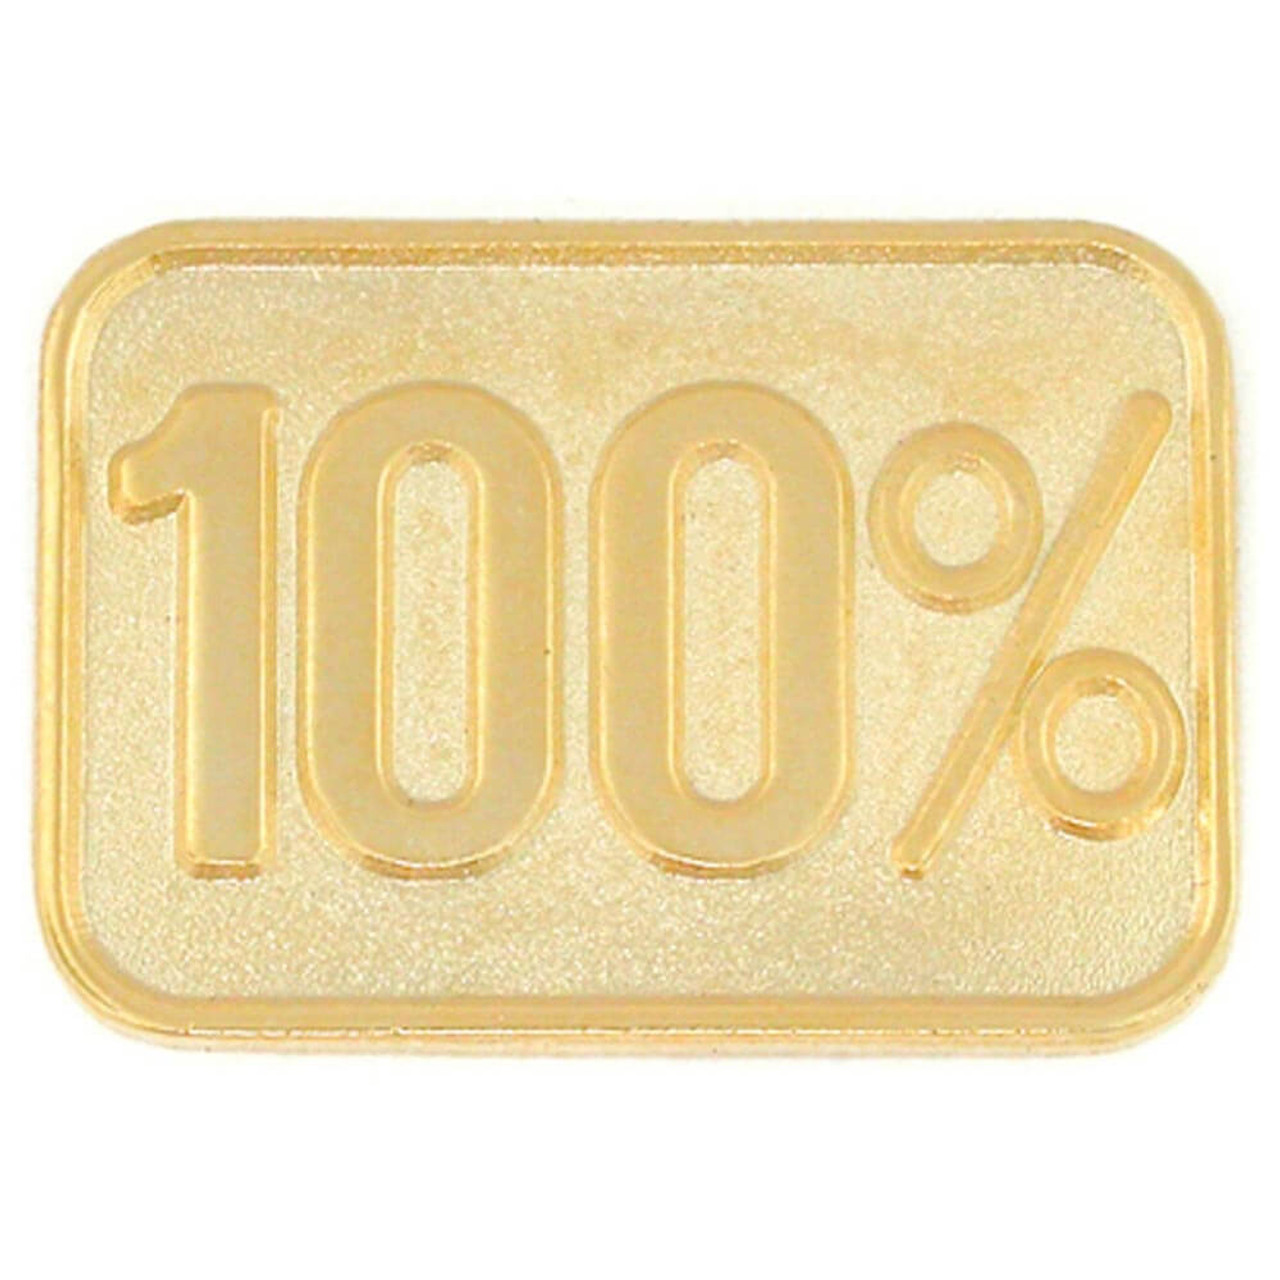 Jewelry Pins Gold (100 Pins) Jewelry Display Pins